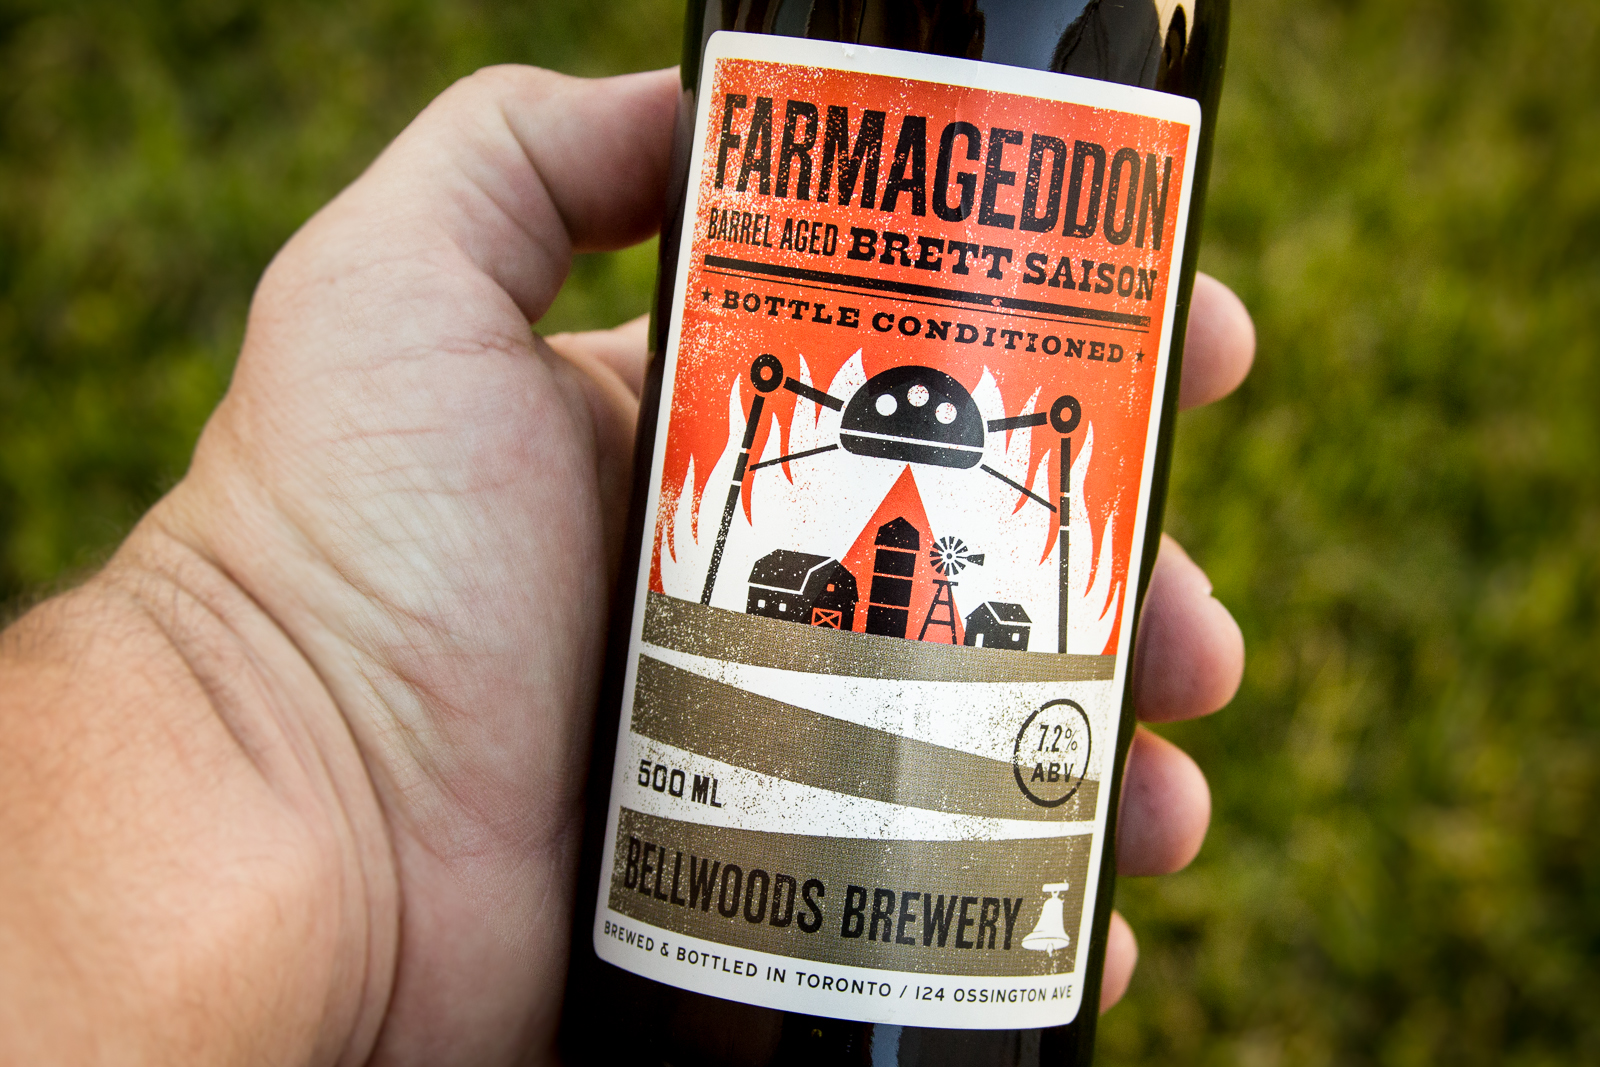 Bellwoods Brewery - Farmageddon